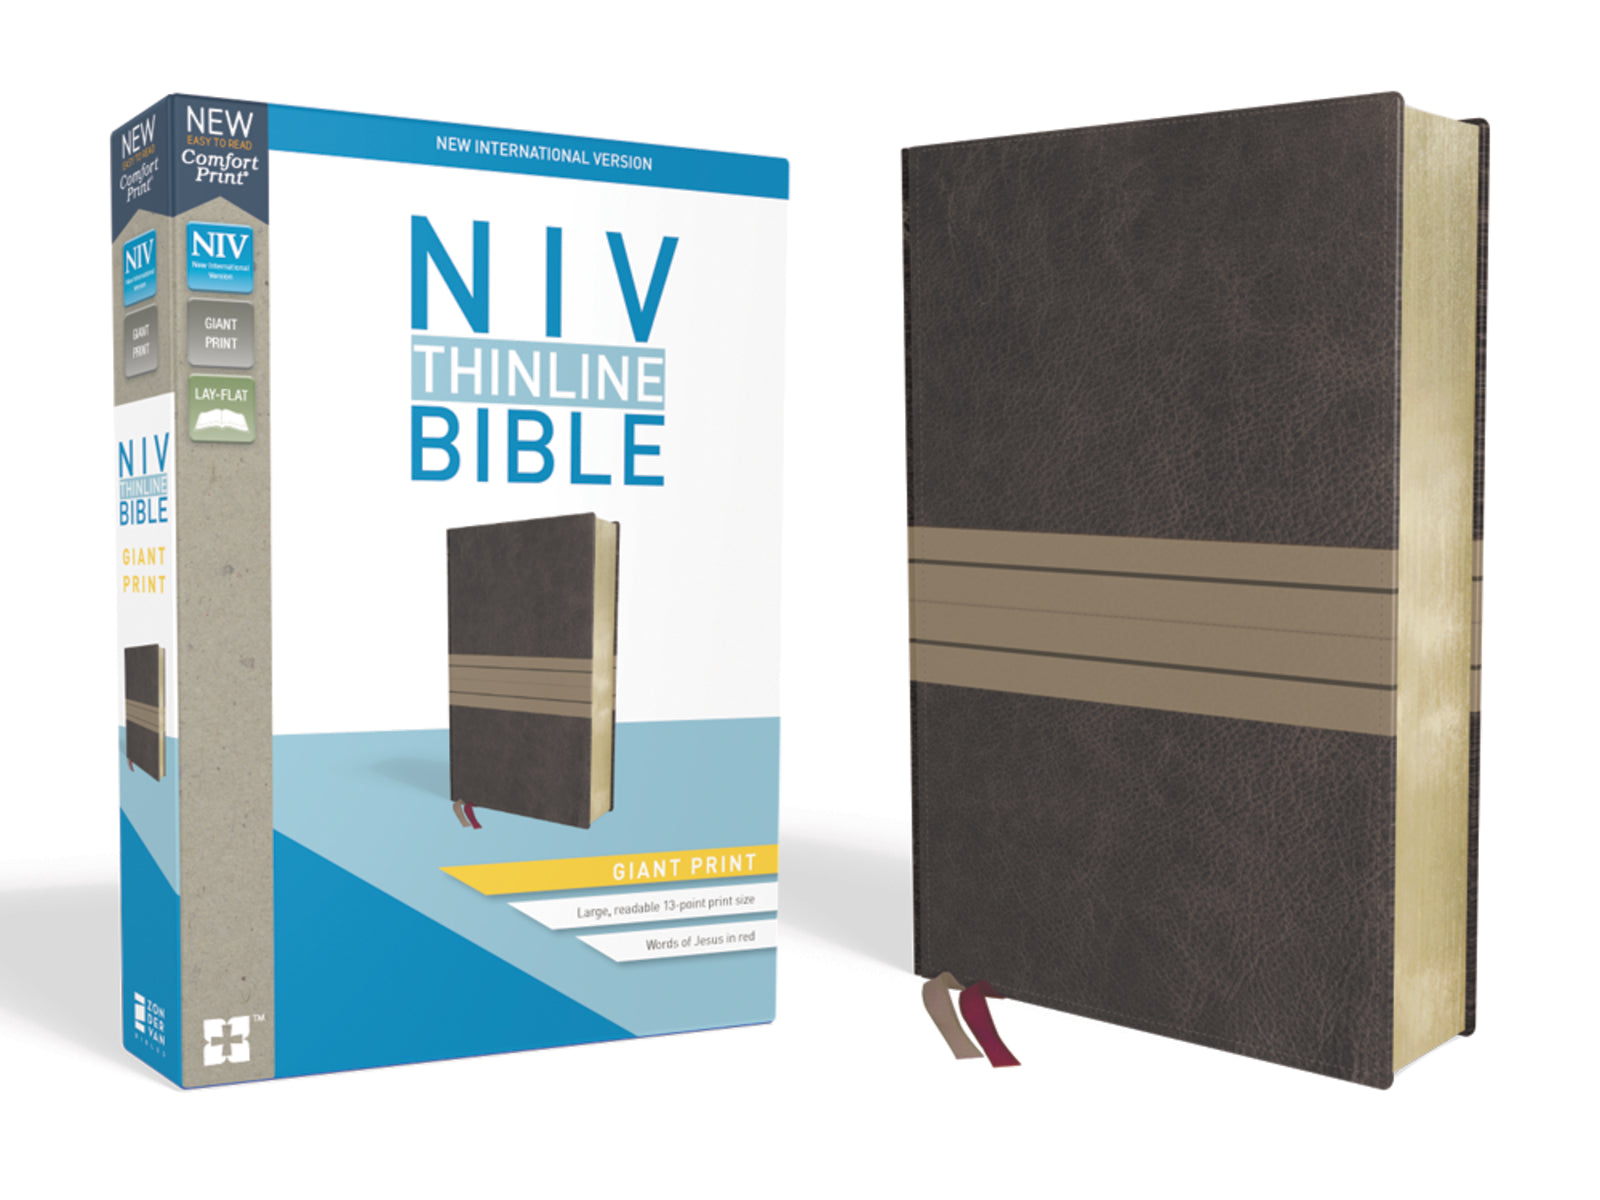 NIV Thinline Bible Giant Print Comfort-Brown/Tan